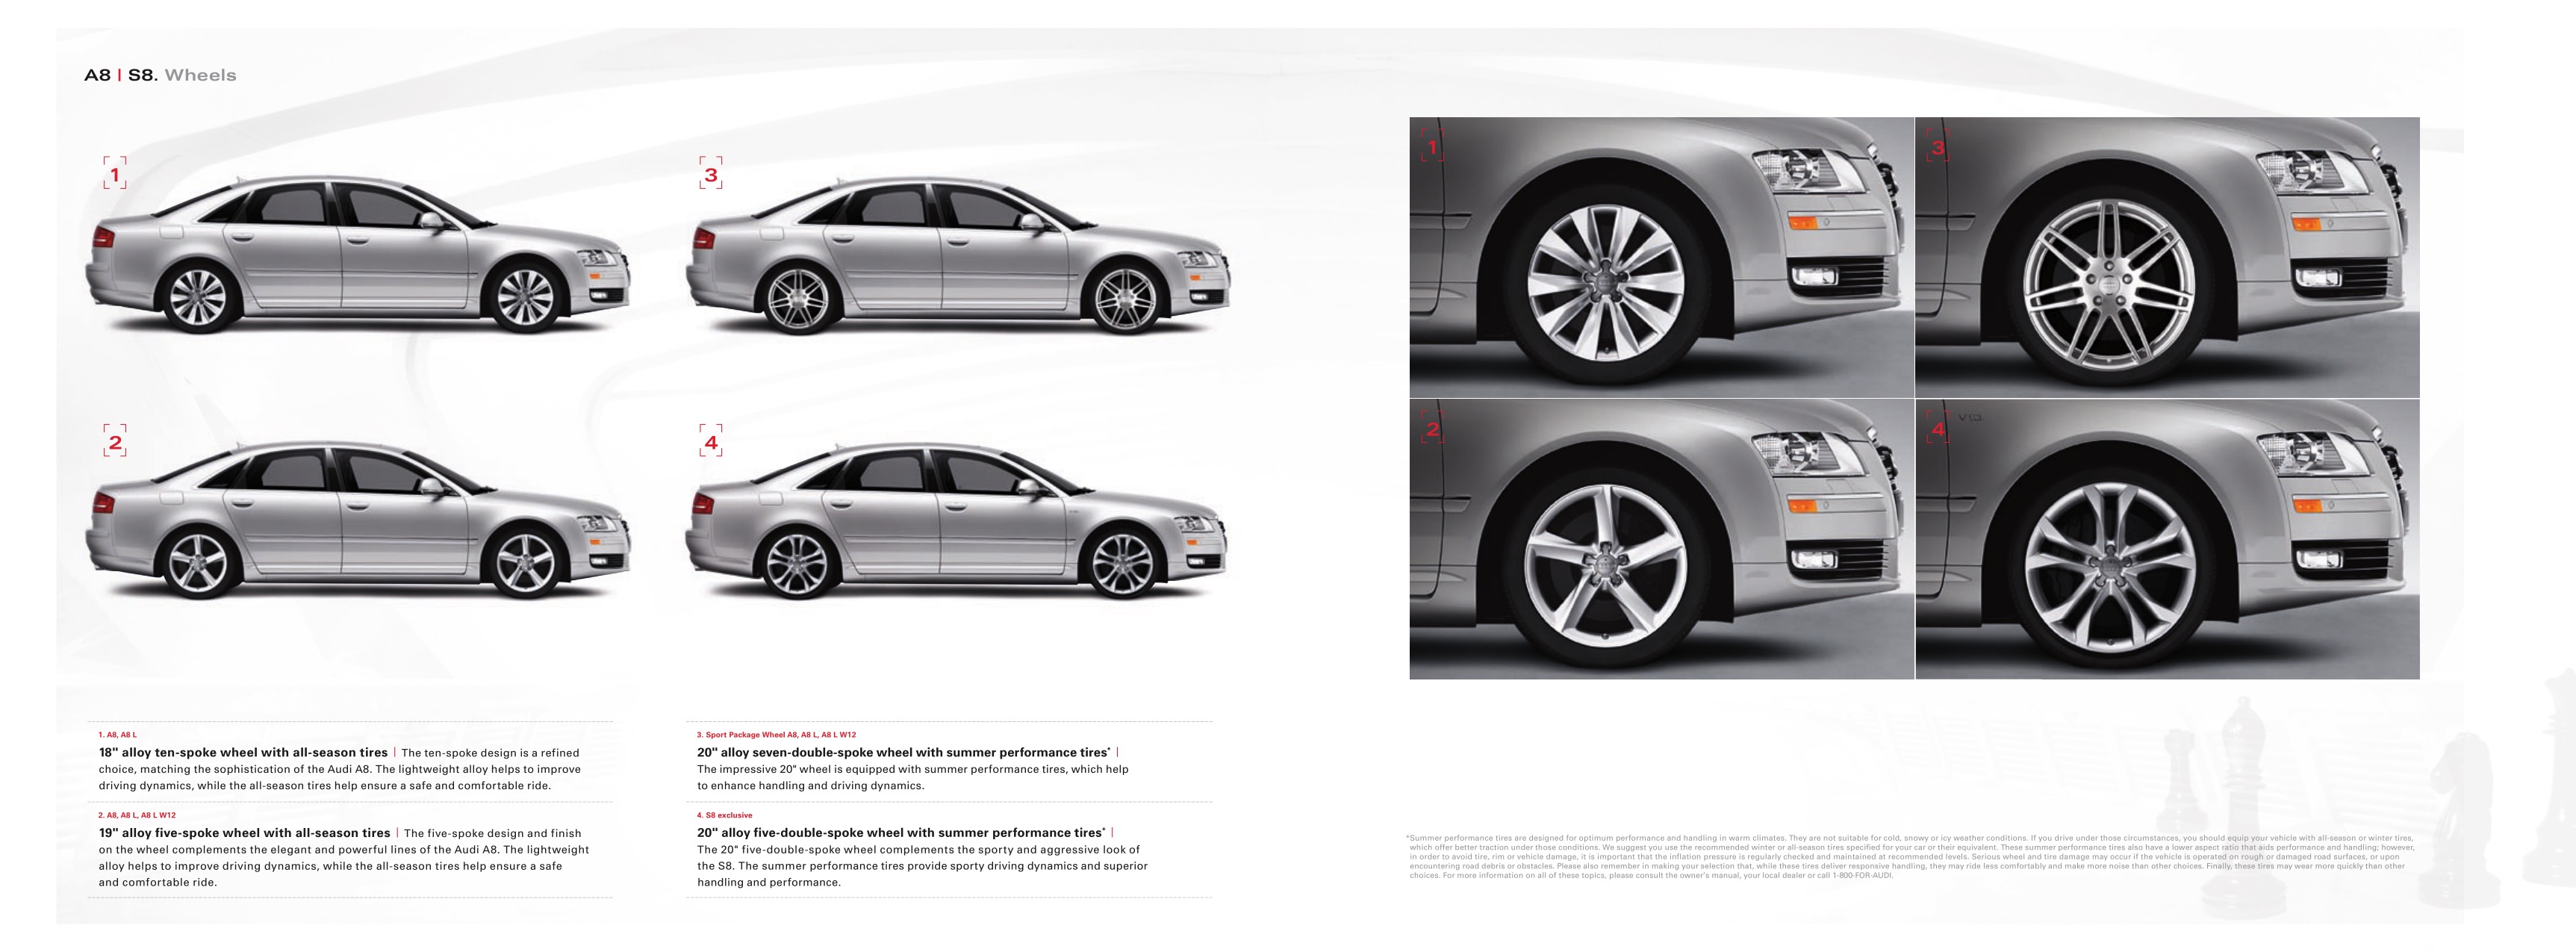 2009 Audi A8 Brochure Page 25